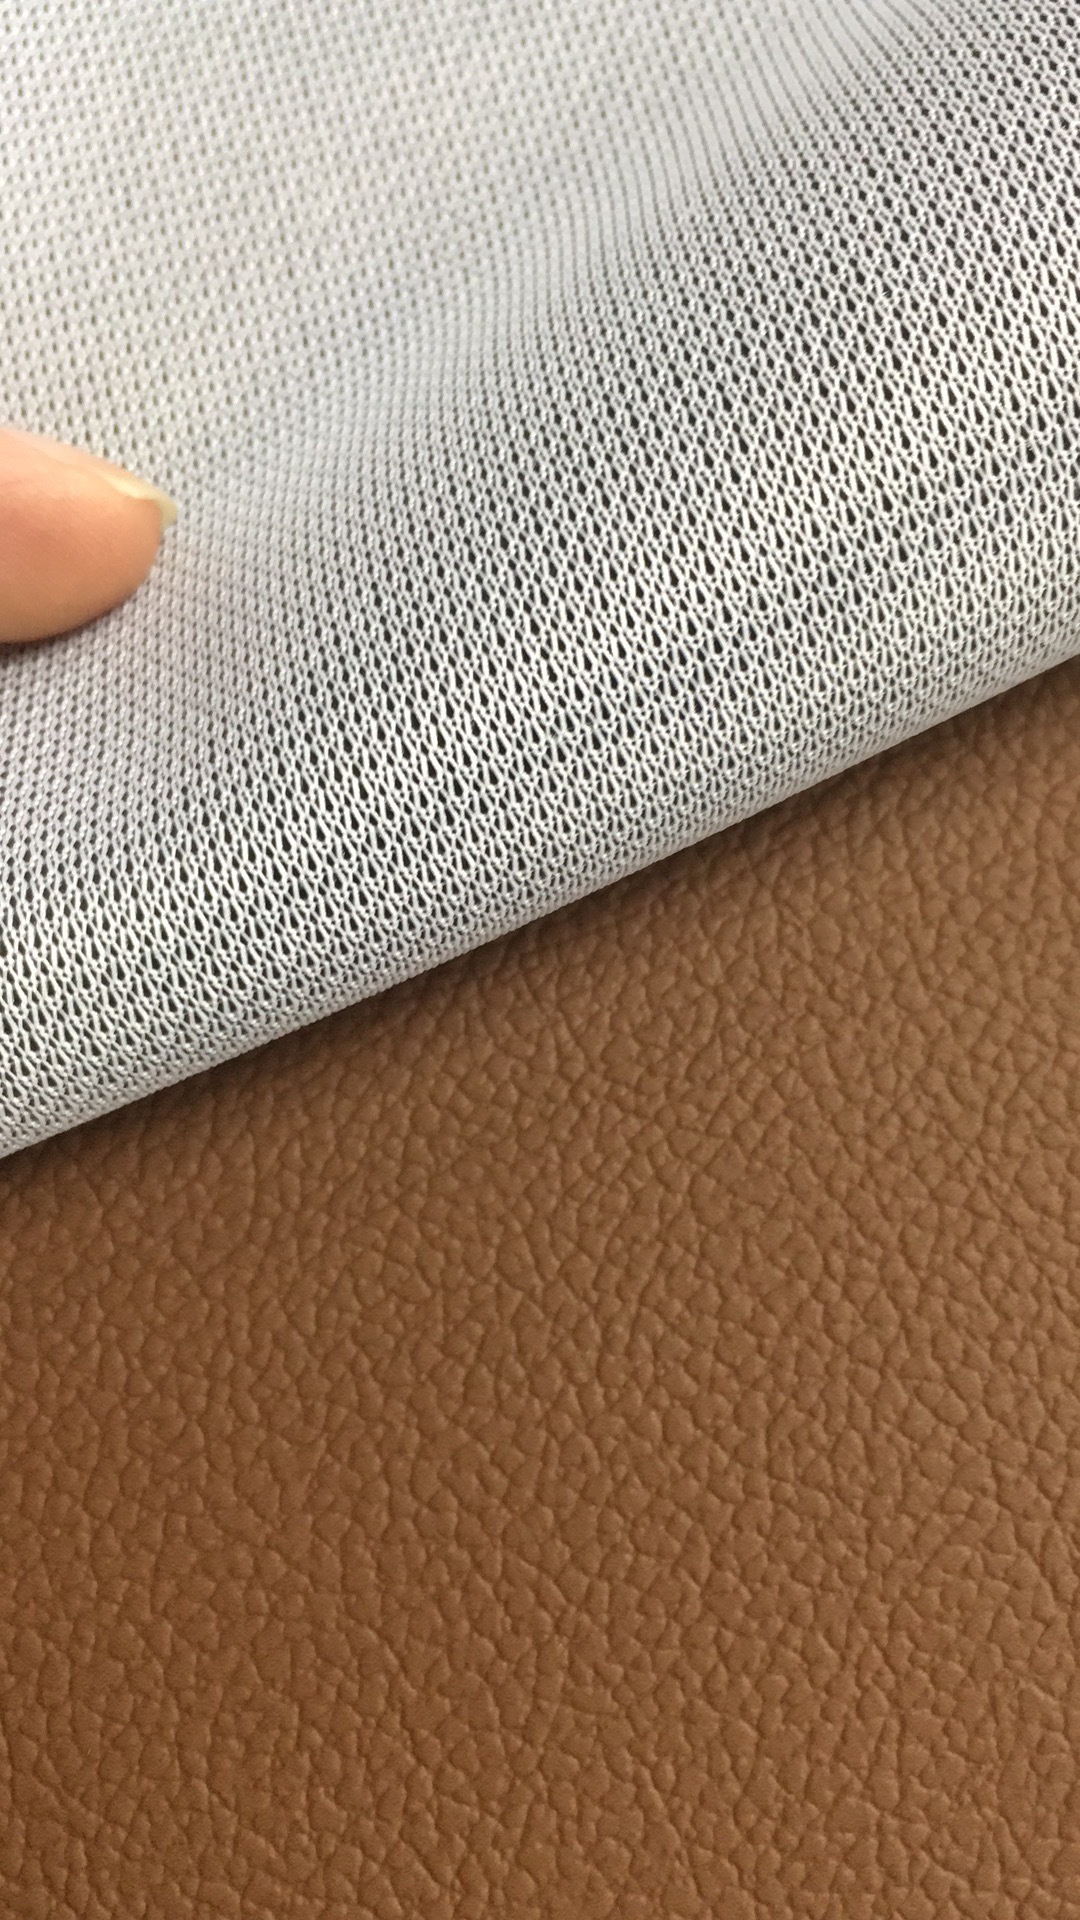 Microfiber Leather Manufacturing, Microfiber Vs Leather